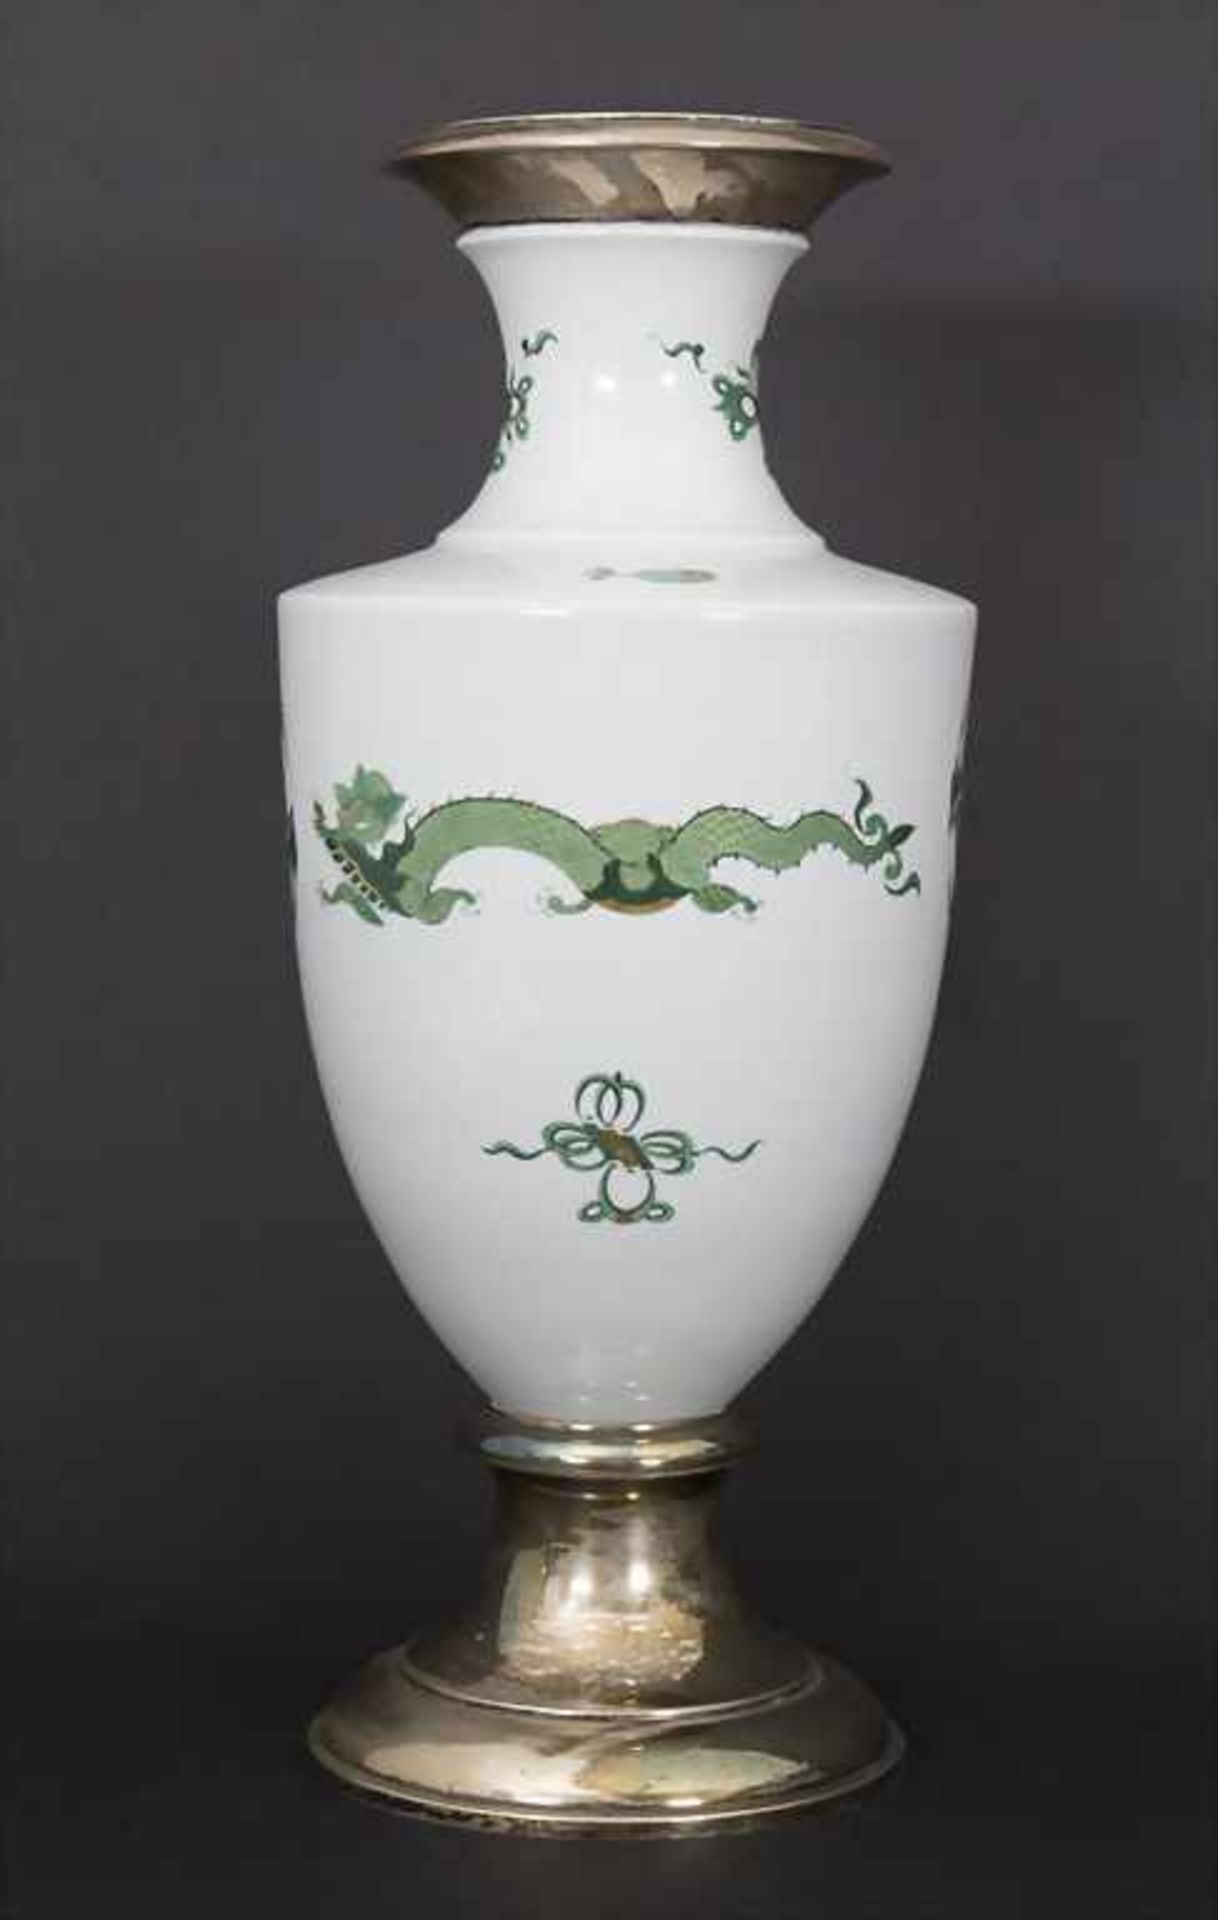 Amphoravase 'Grüner Drache' mit Silbermontierung / An amphora vase 'Green Dragon' with silver mount, - Image 2 of 8